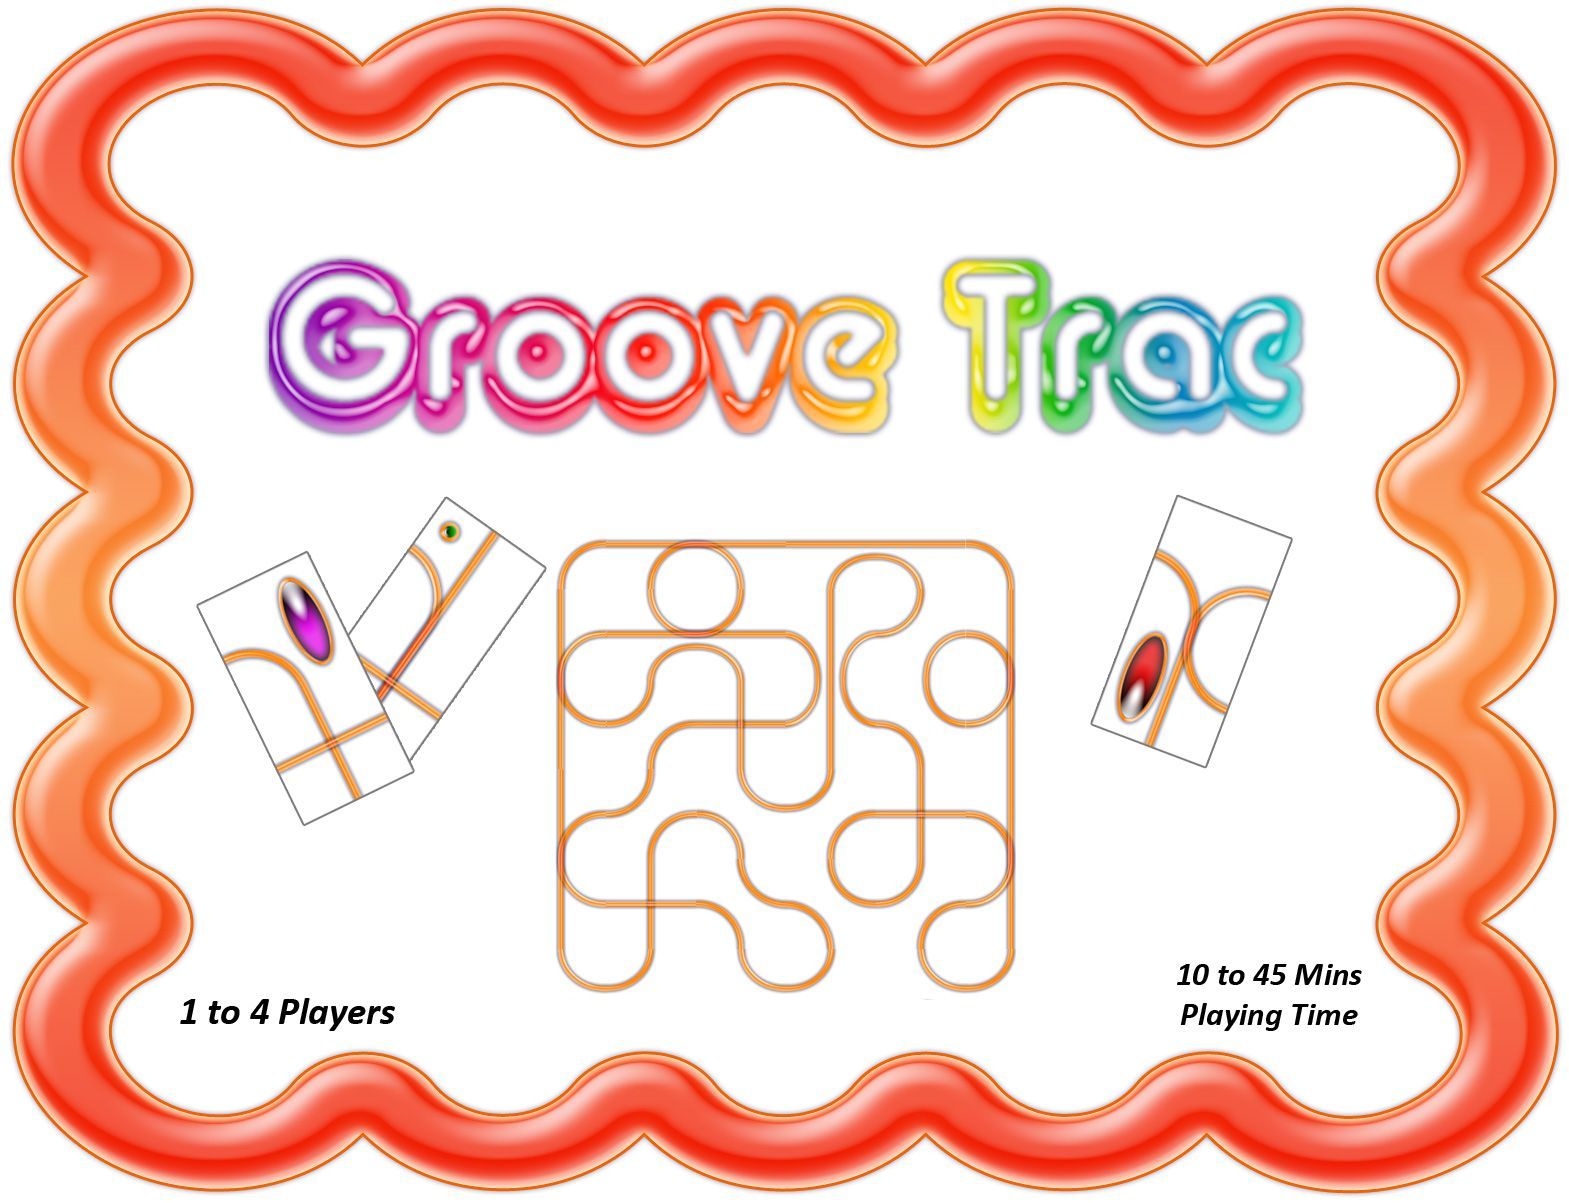 Groove Trac